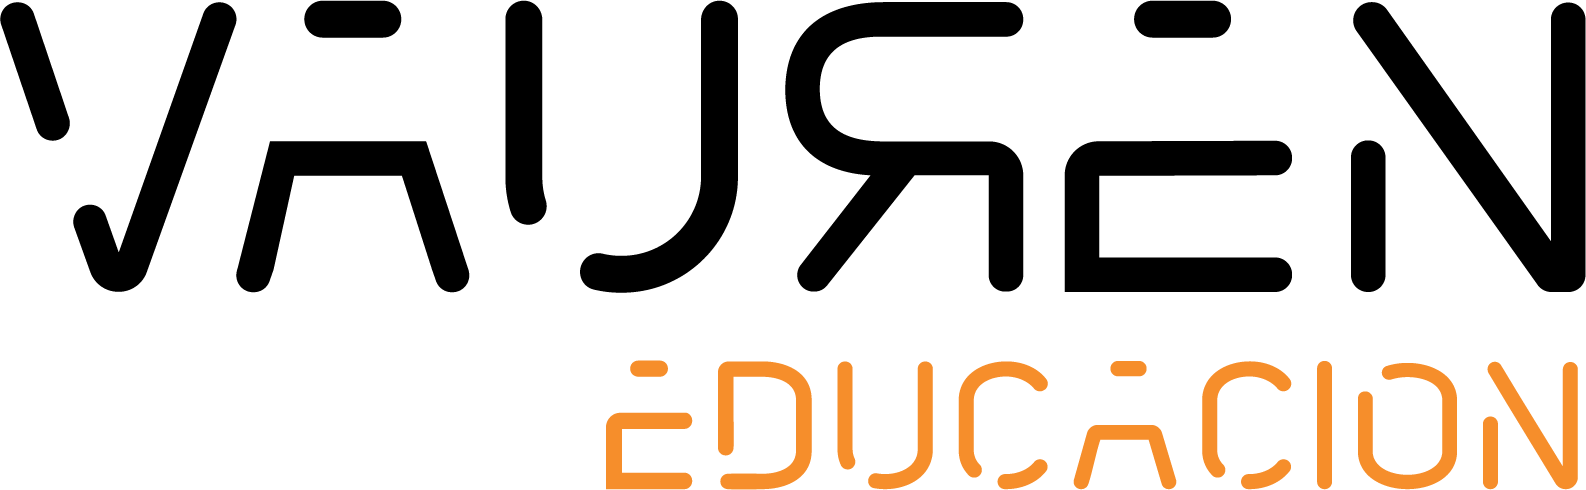 Logo Educacion